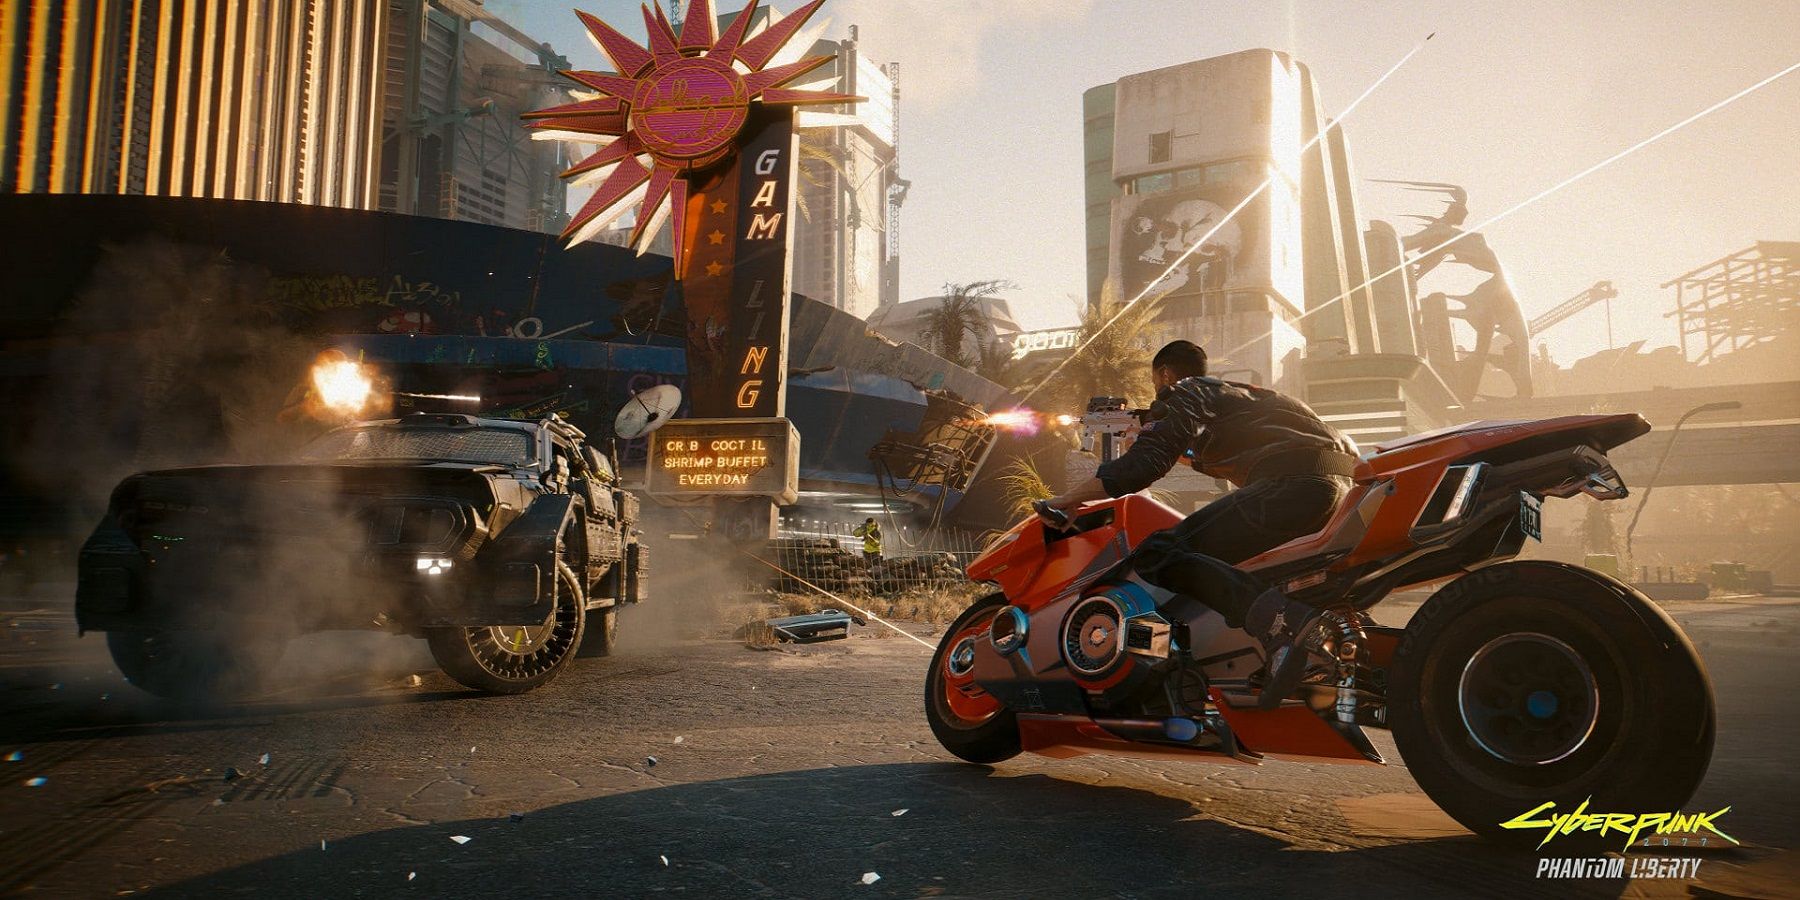 Image from Cyberpunk 2077: Phantom Liberty shwing the exterior of a run down casino.